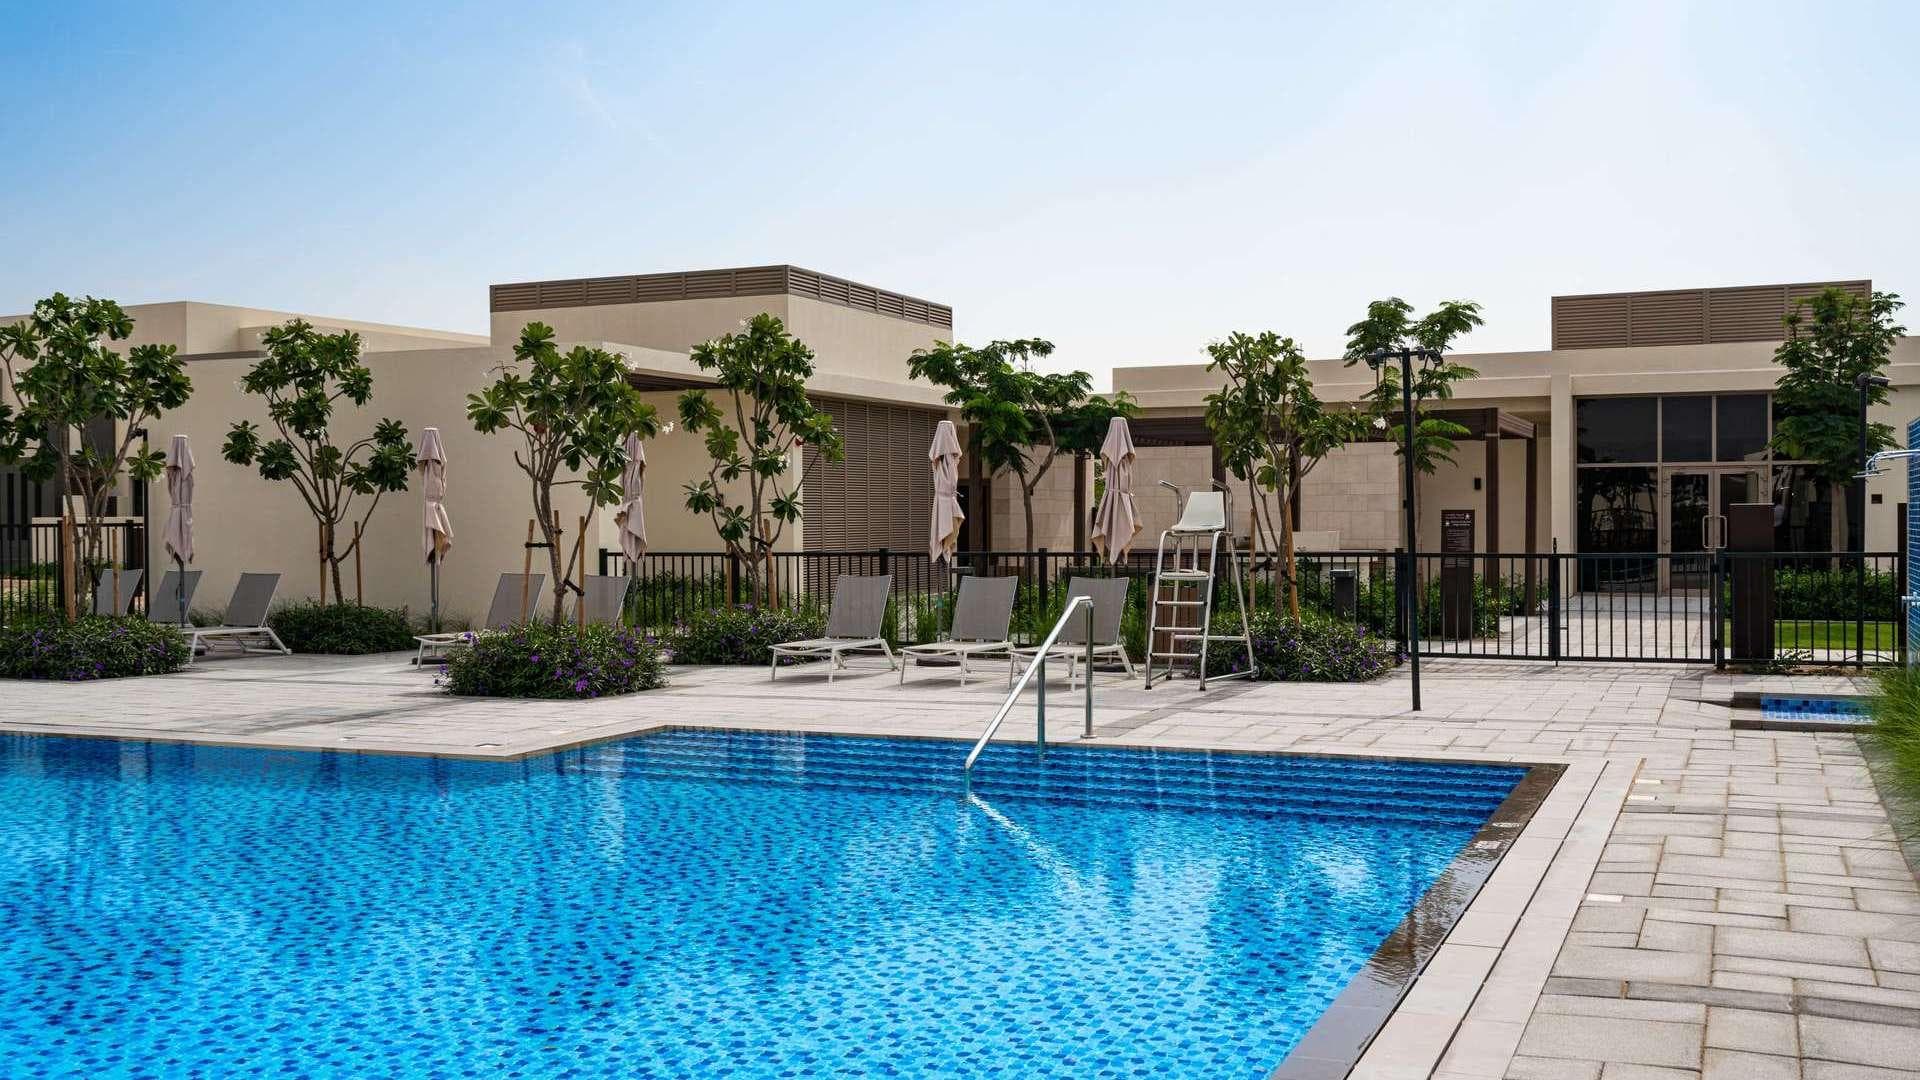 4 Bedroom Apartment For Rent Maple At Dubai Hills Estate Lp18257 1537e137a213e800.jpg